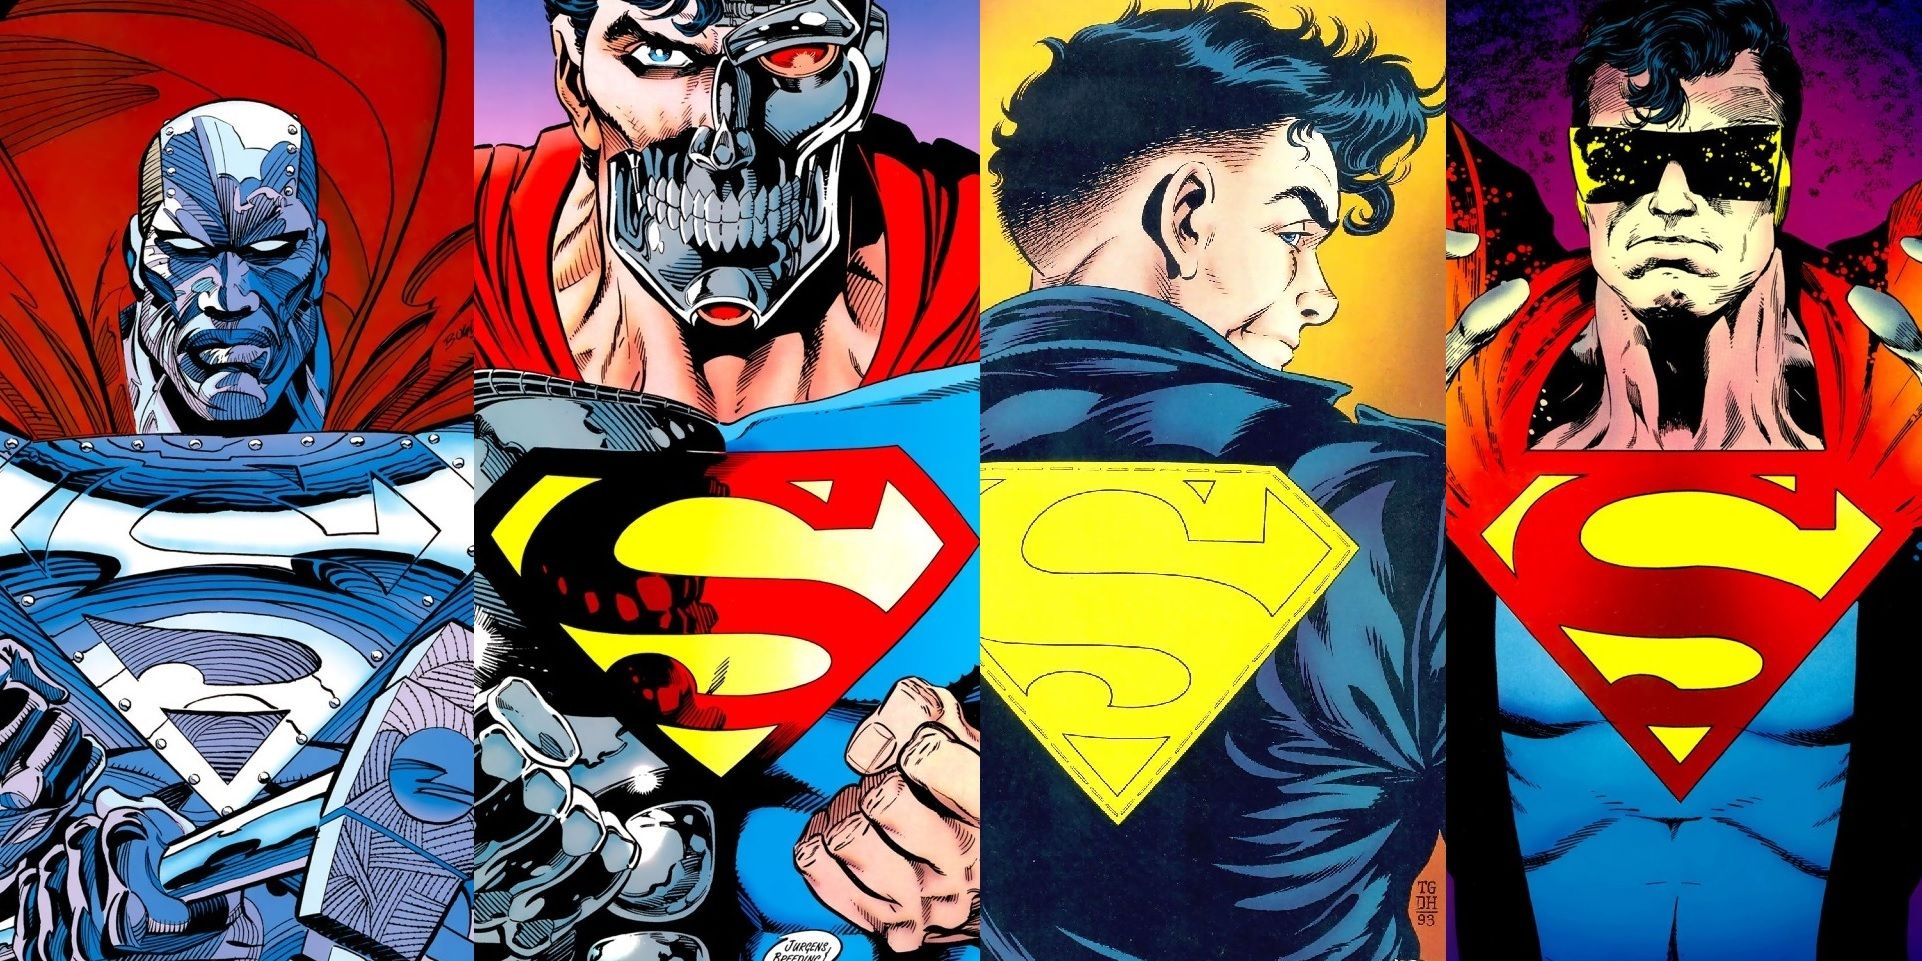 Steel, the Cyborg Superman, Superboy and the Eradicator